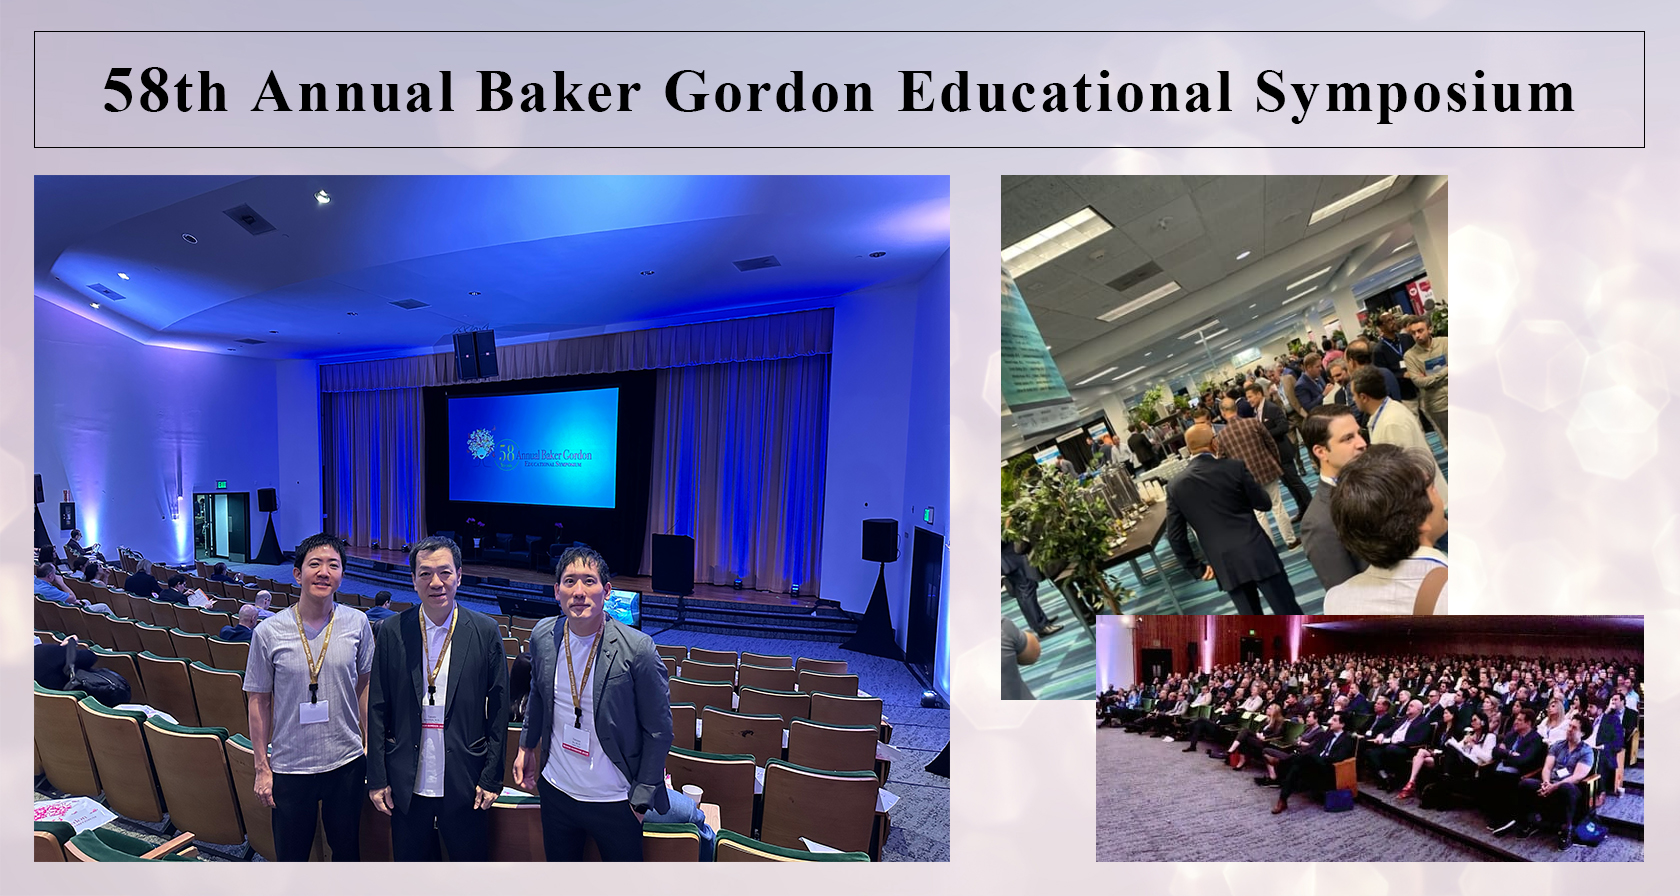 58th Annual Baker Gordon Educational Symposium